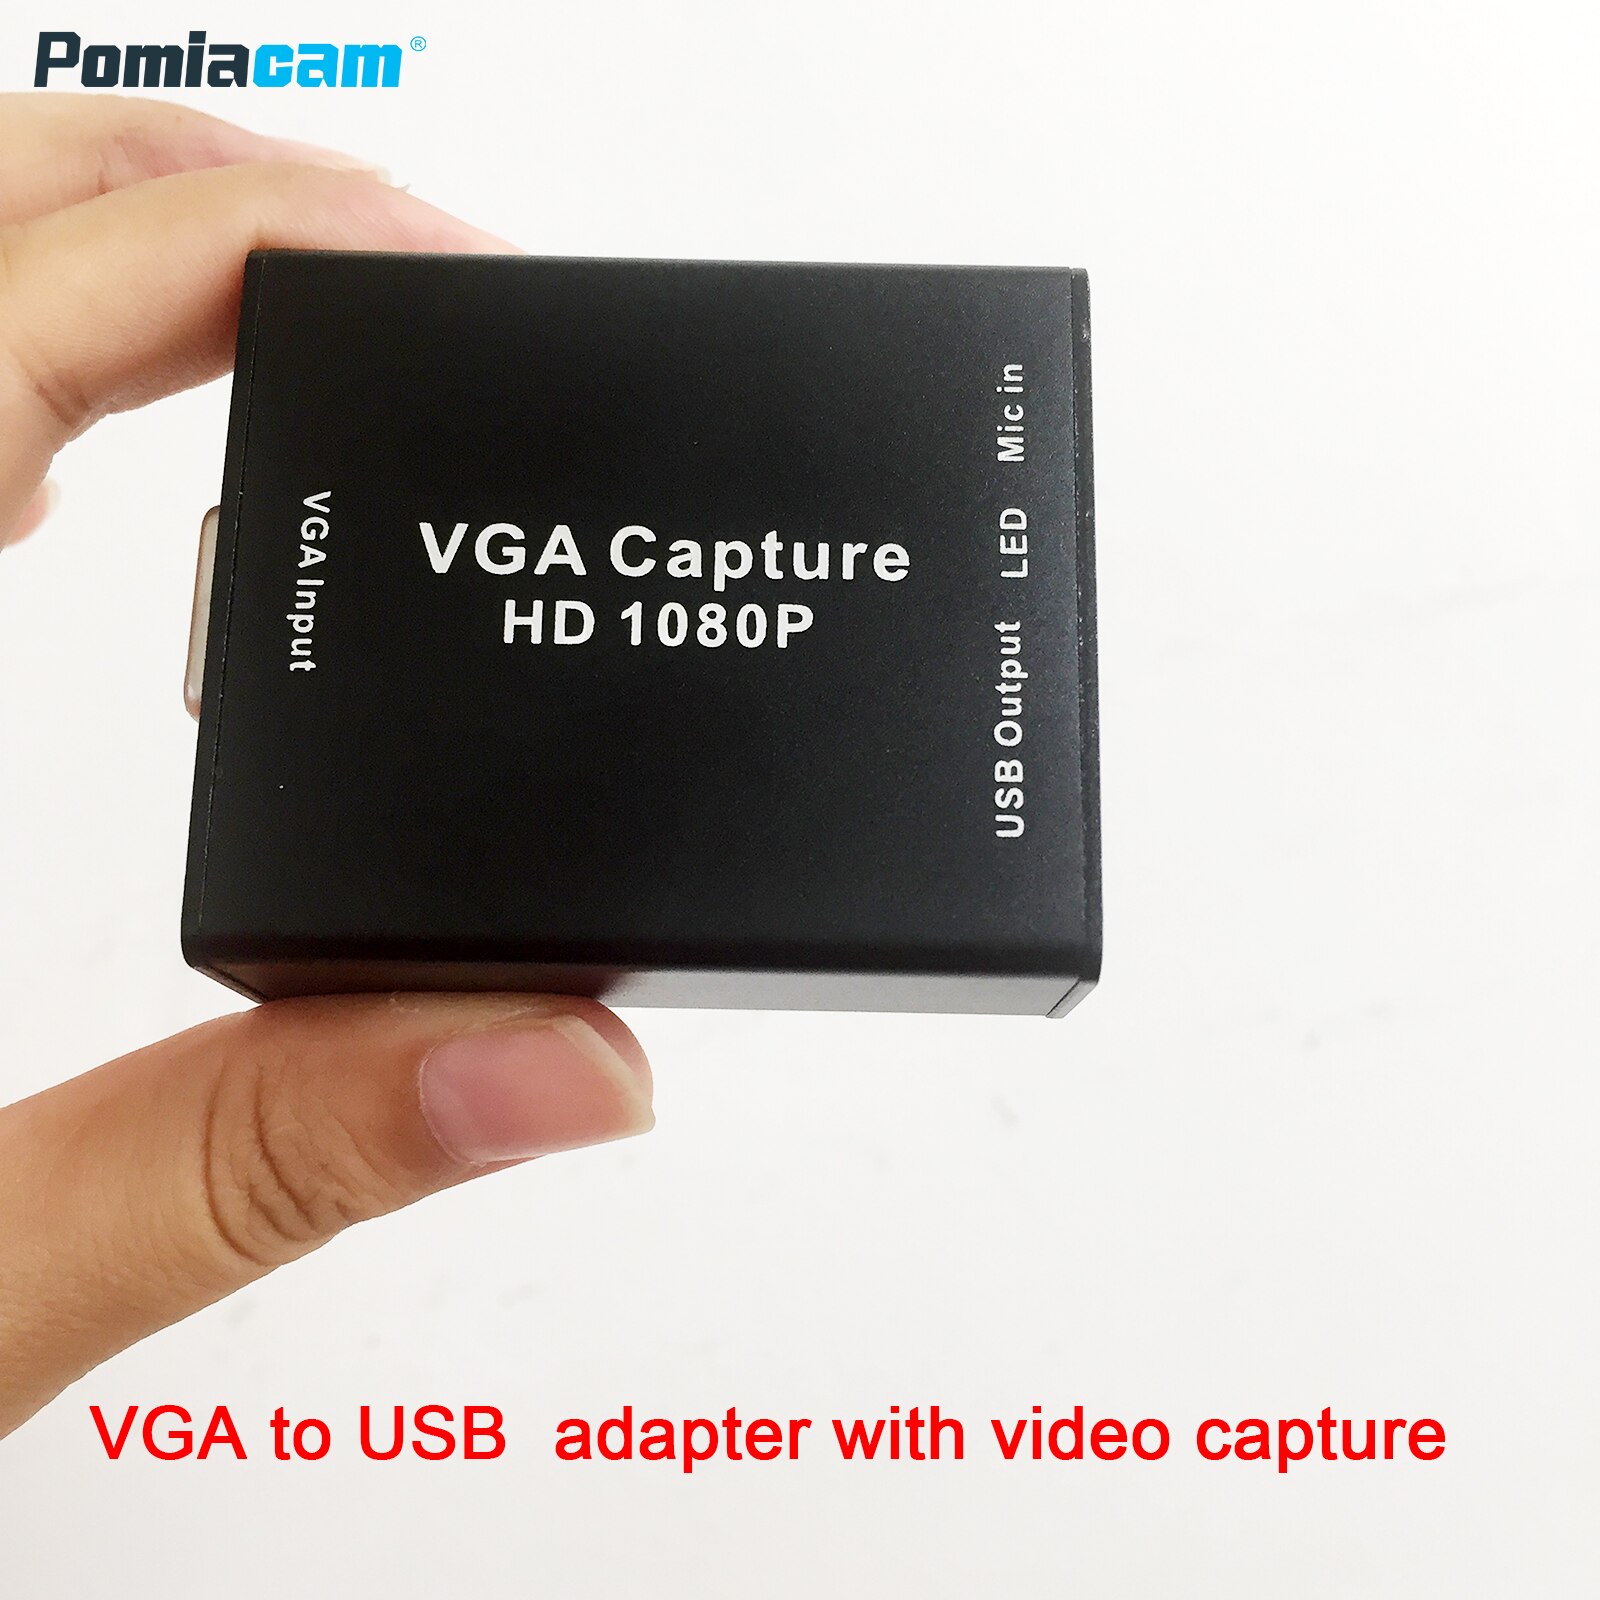 Vga-til-usb-adaptere 1080p med videooptagelseskort vga dvrsupport uvc / uac standard, transportport er usb 2.0